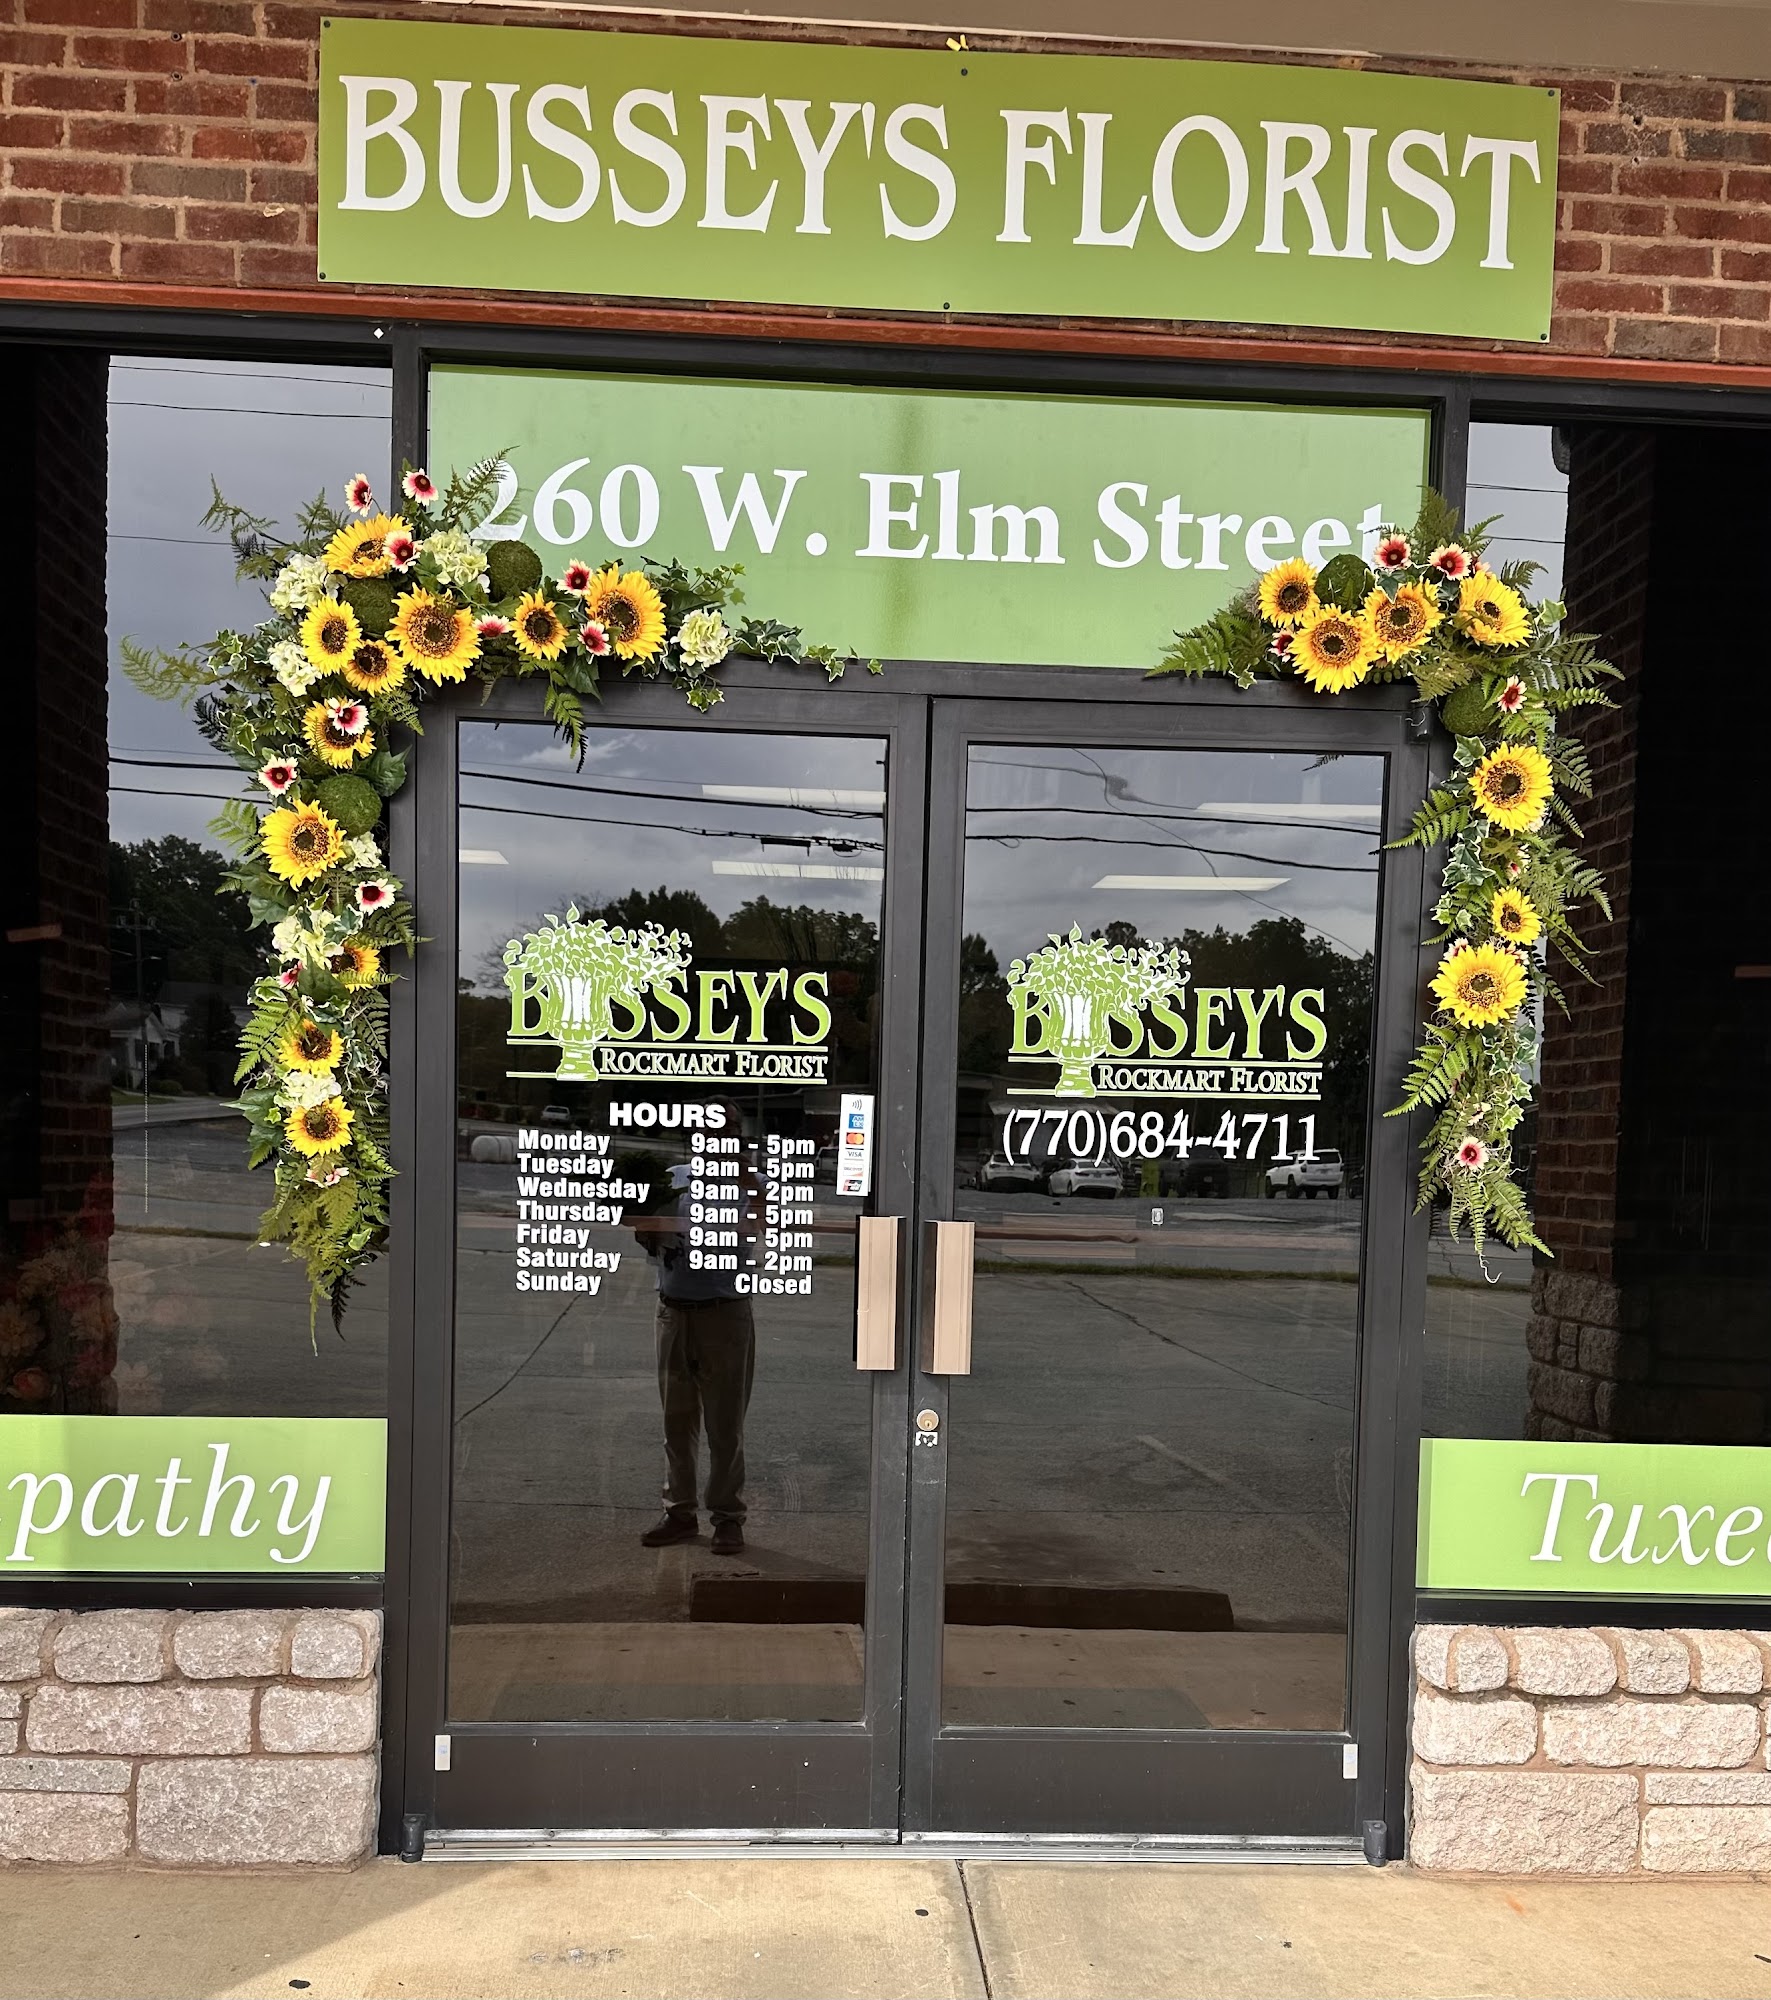 Bussey's Florist & Gifts 260 W Elm St, Rockmart Georgia 30153